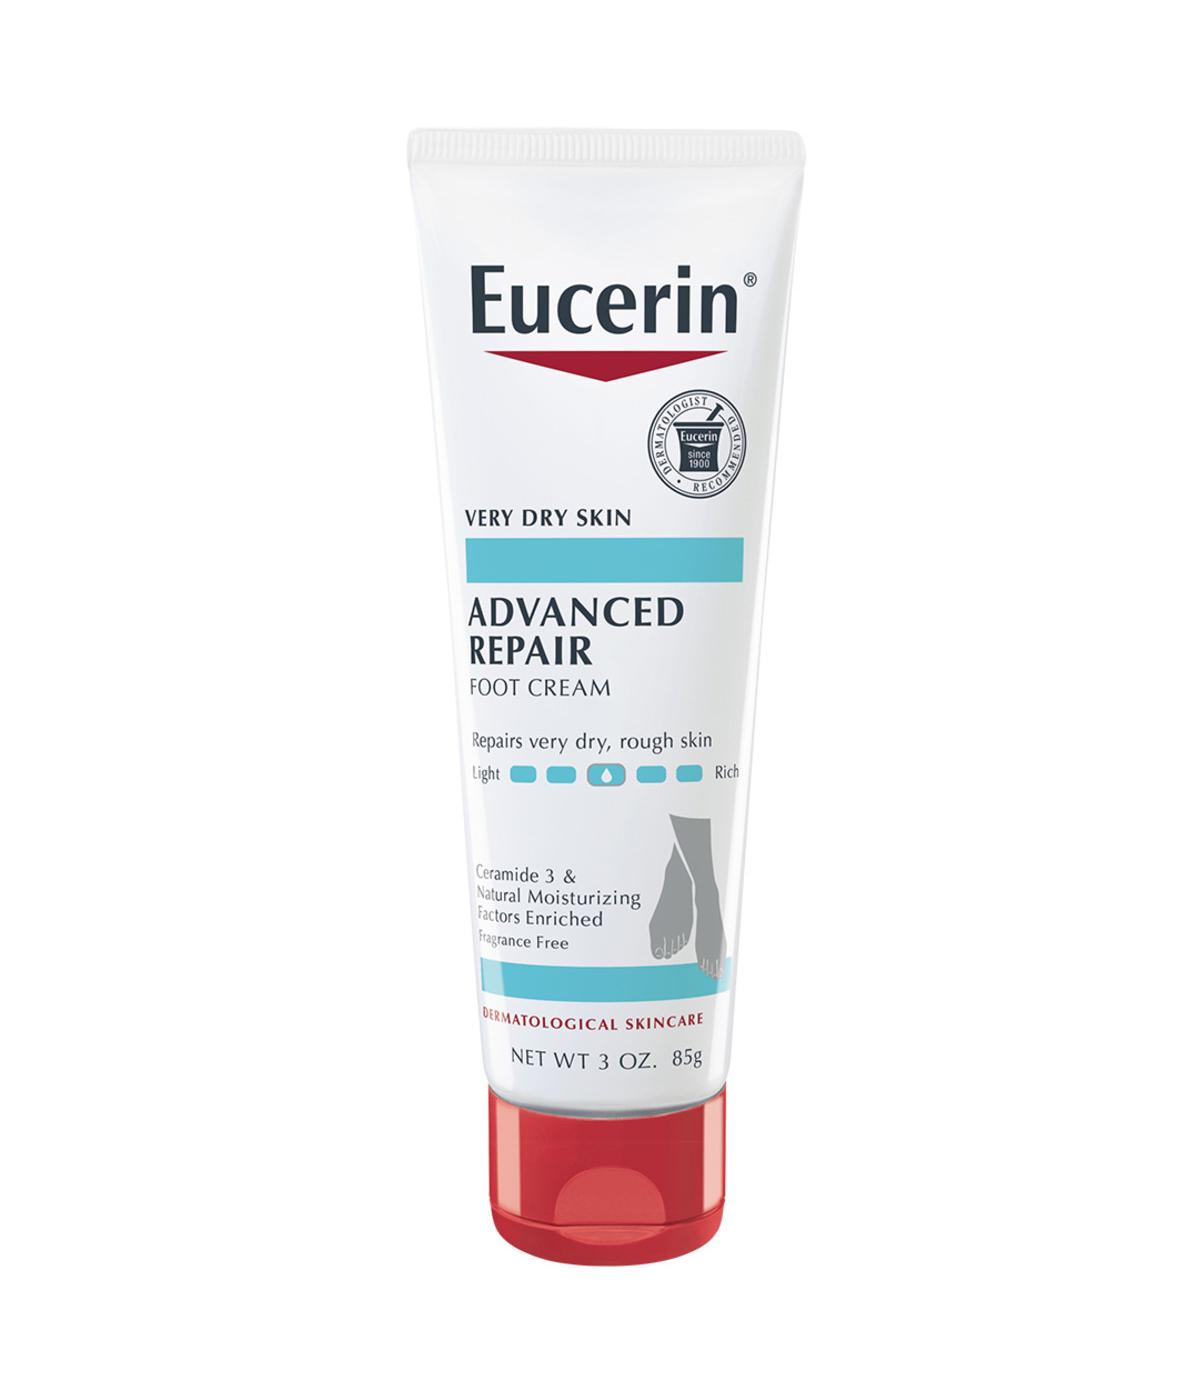 Eucerin Advanced Repair Foot Cream; image 1 of 3